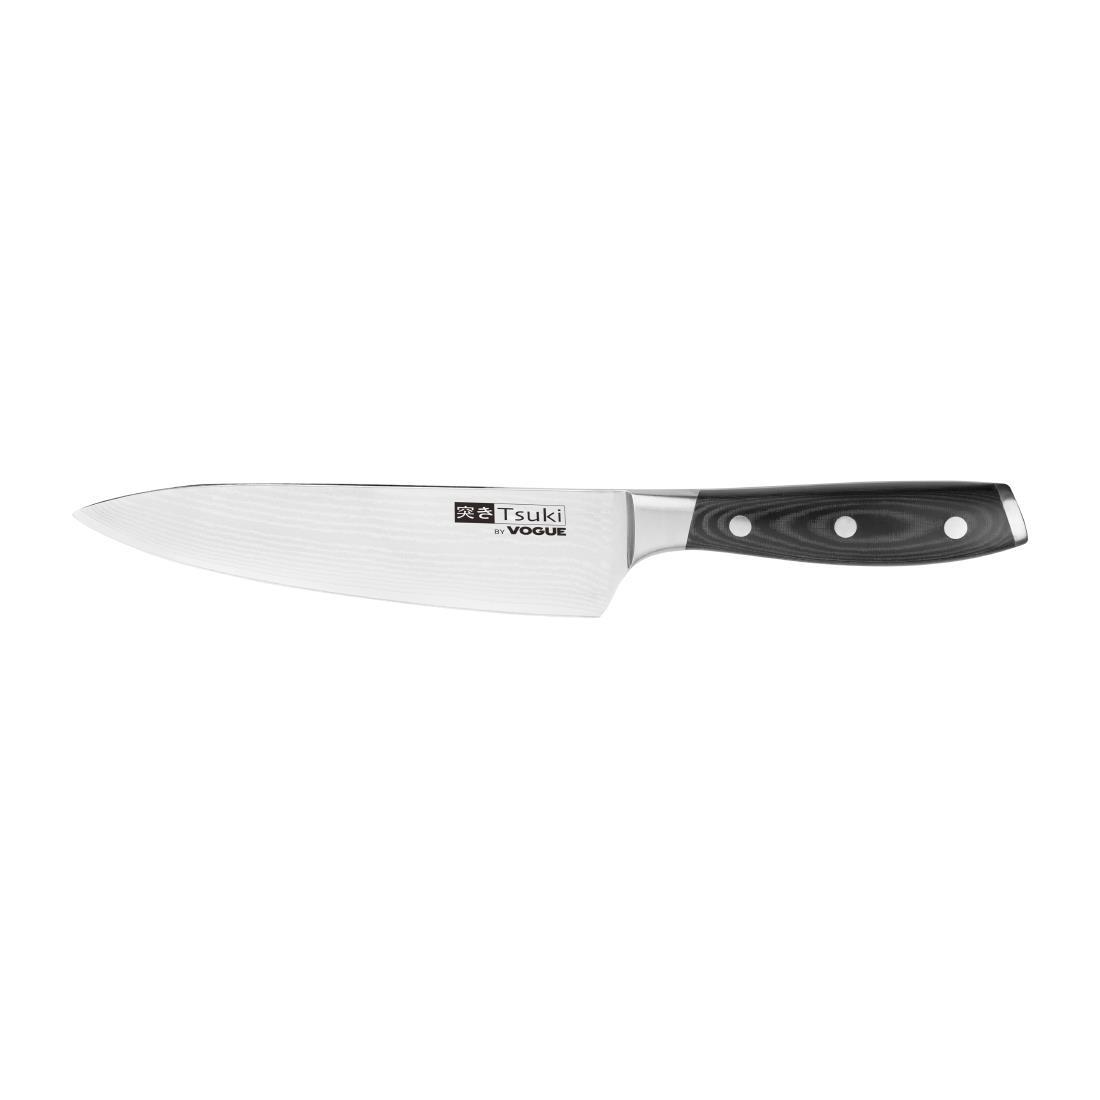 Vogue Tsuki Series 7 Chefs Knife 20.5cm - CF841  - 2